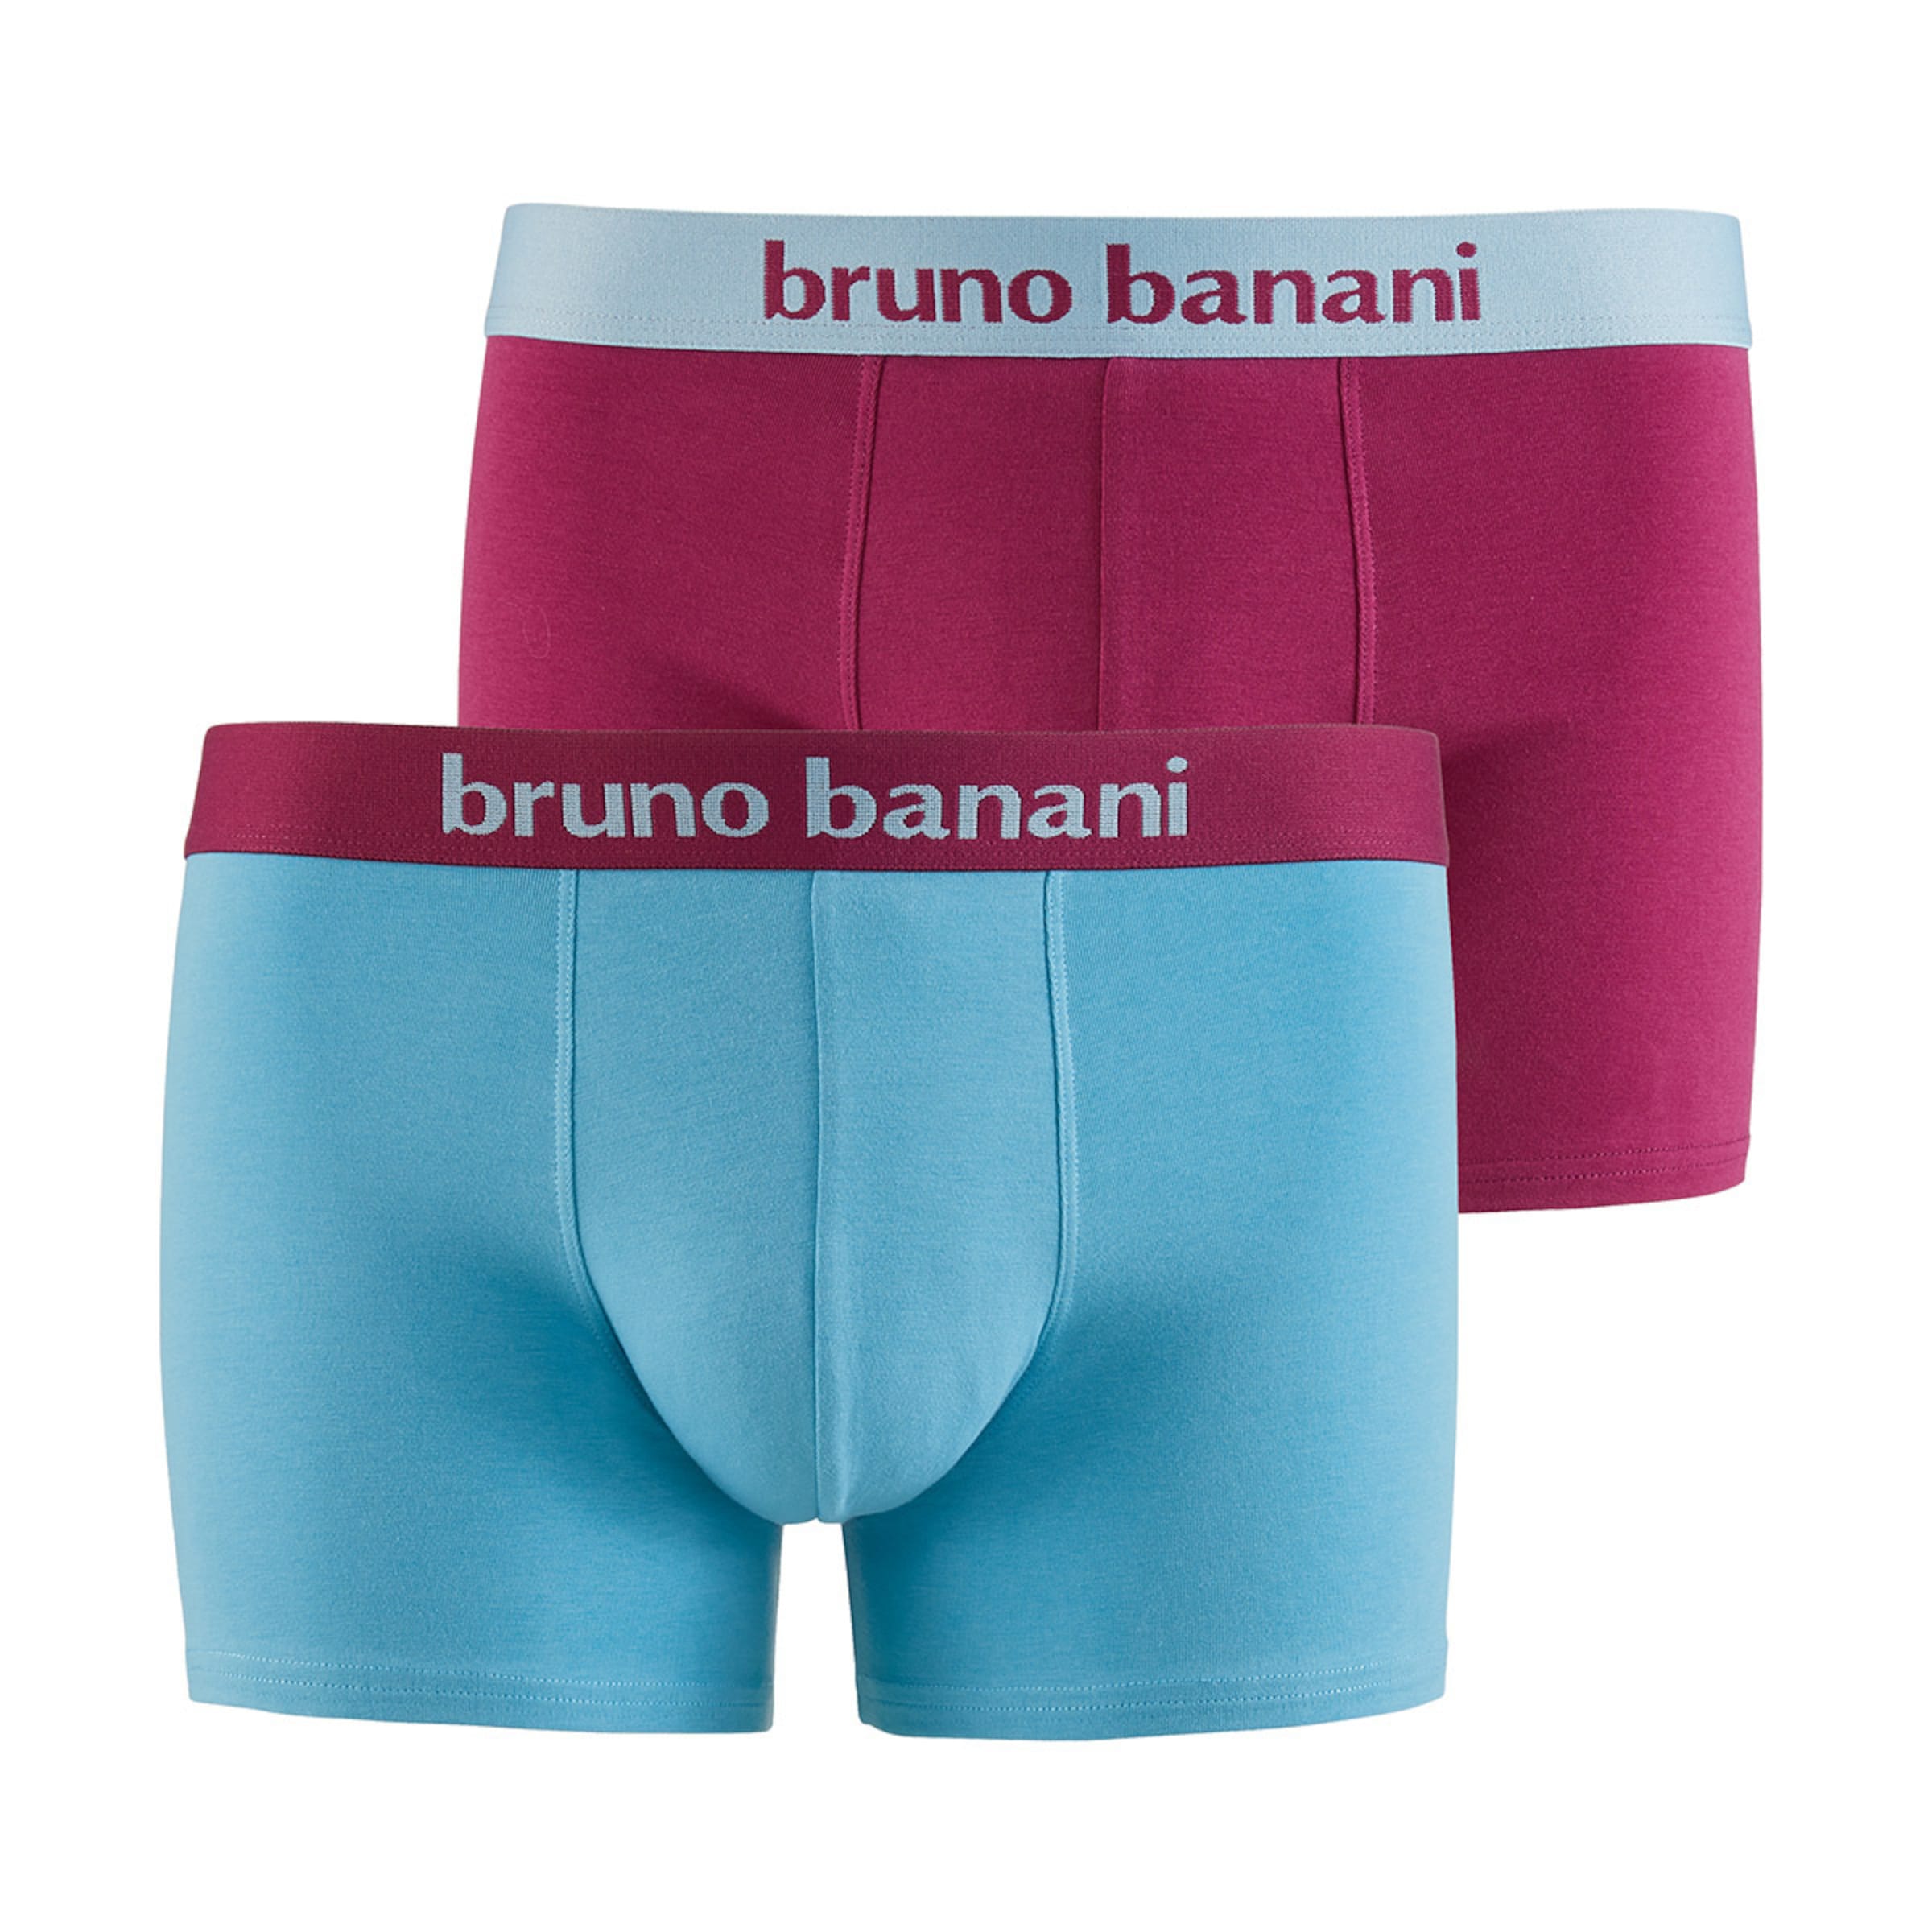 Sous-vêtements Boxers BRUNO BANANI en Bleu-Gris, Rouge Rubis 